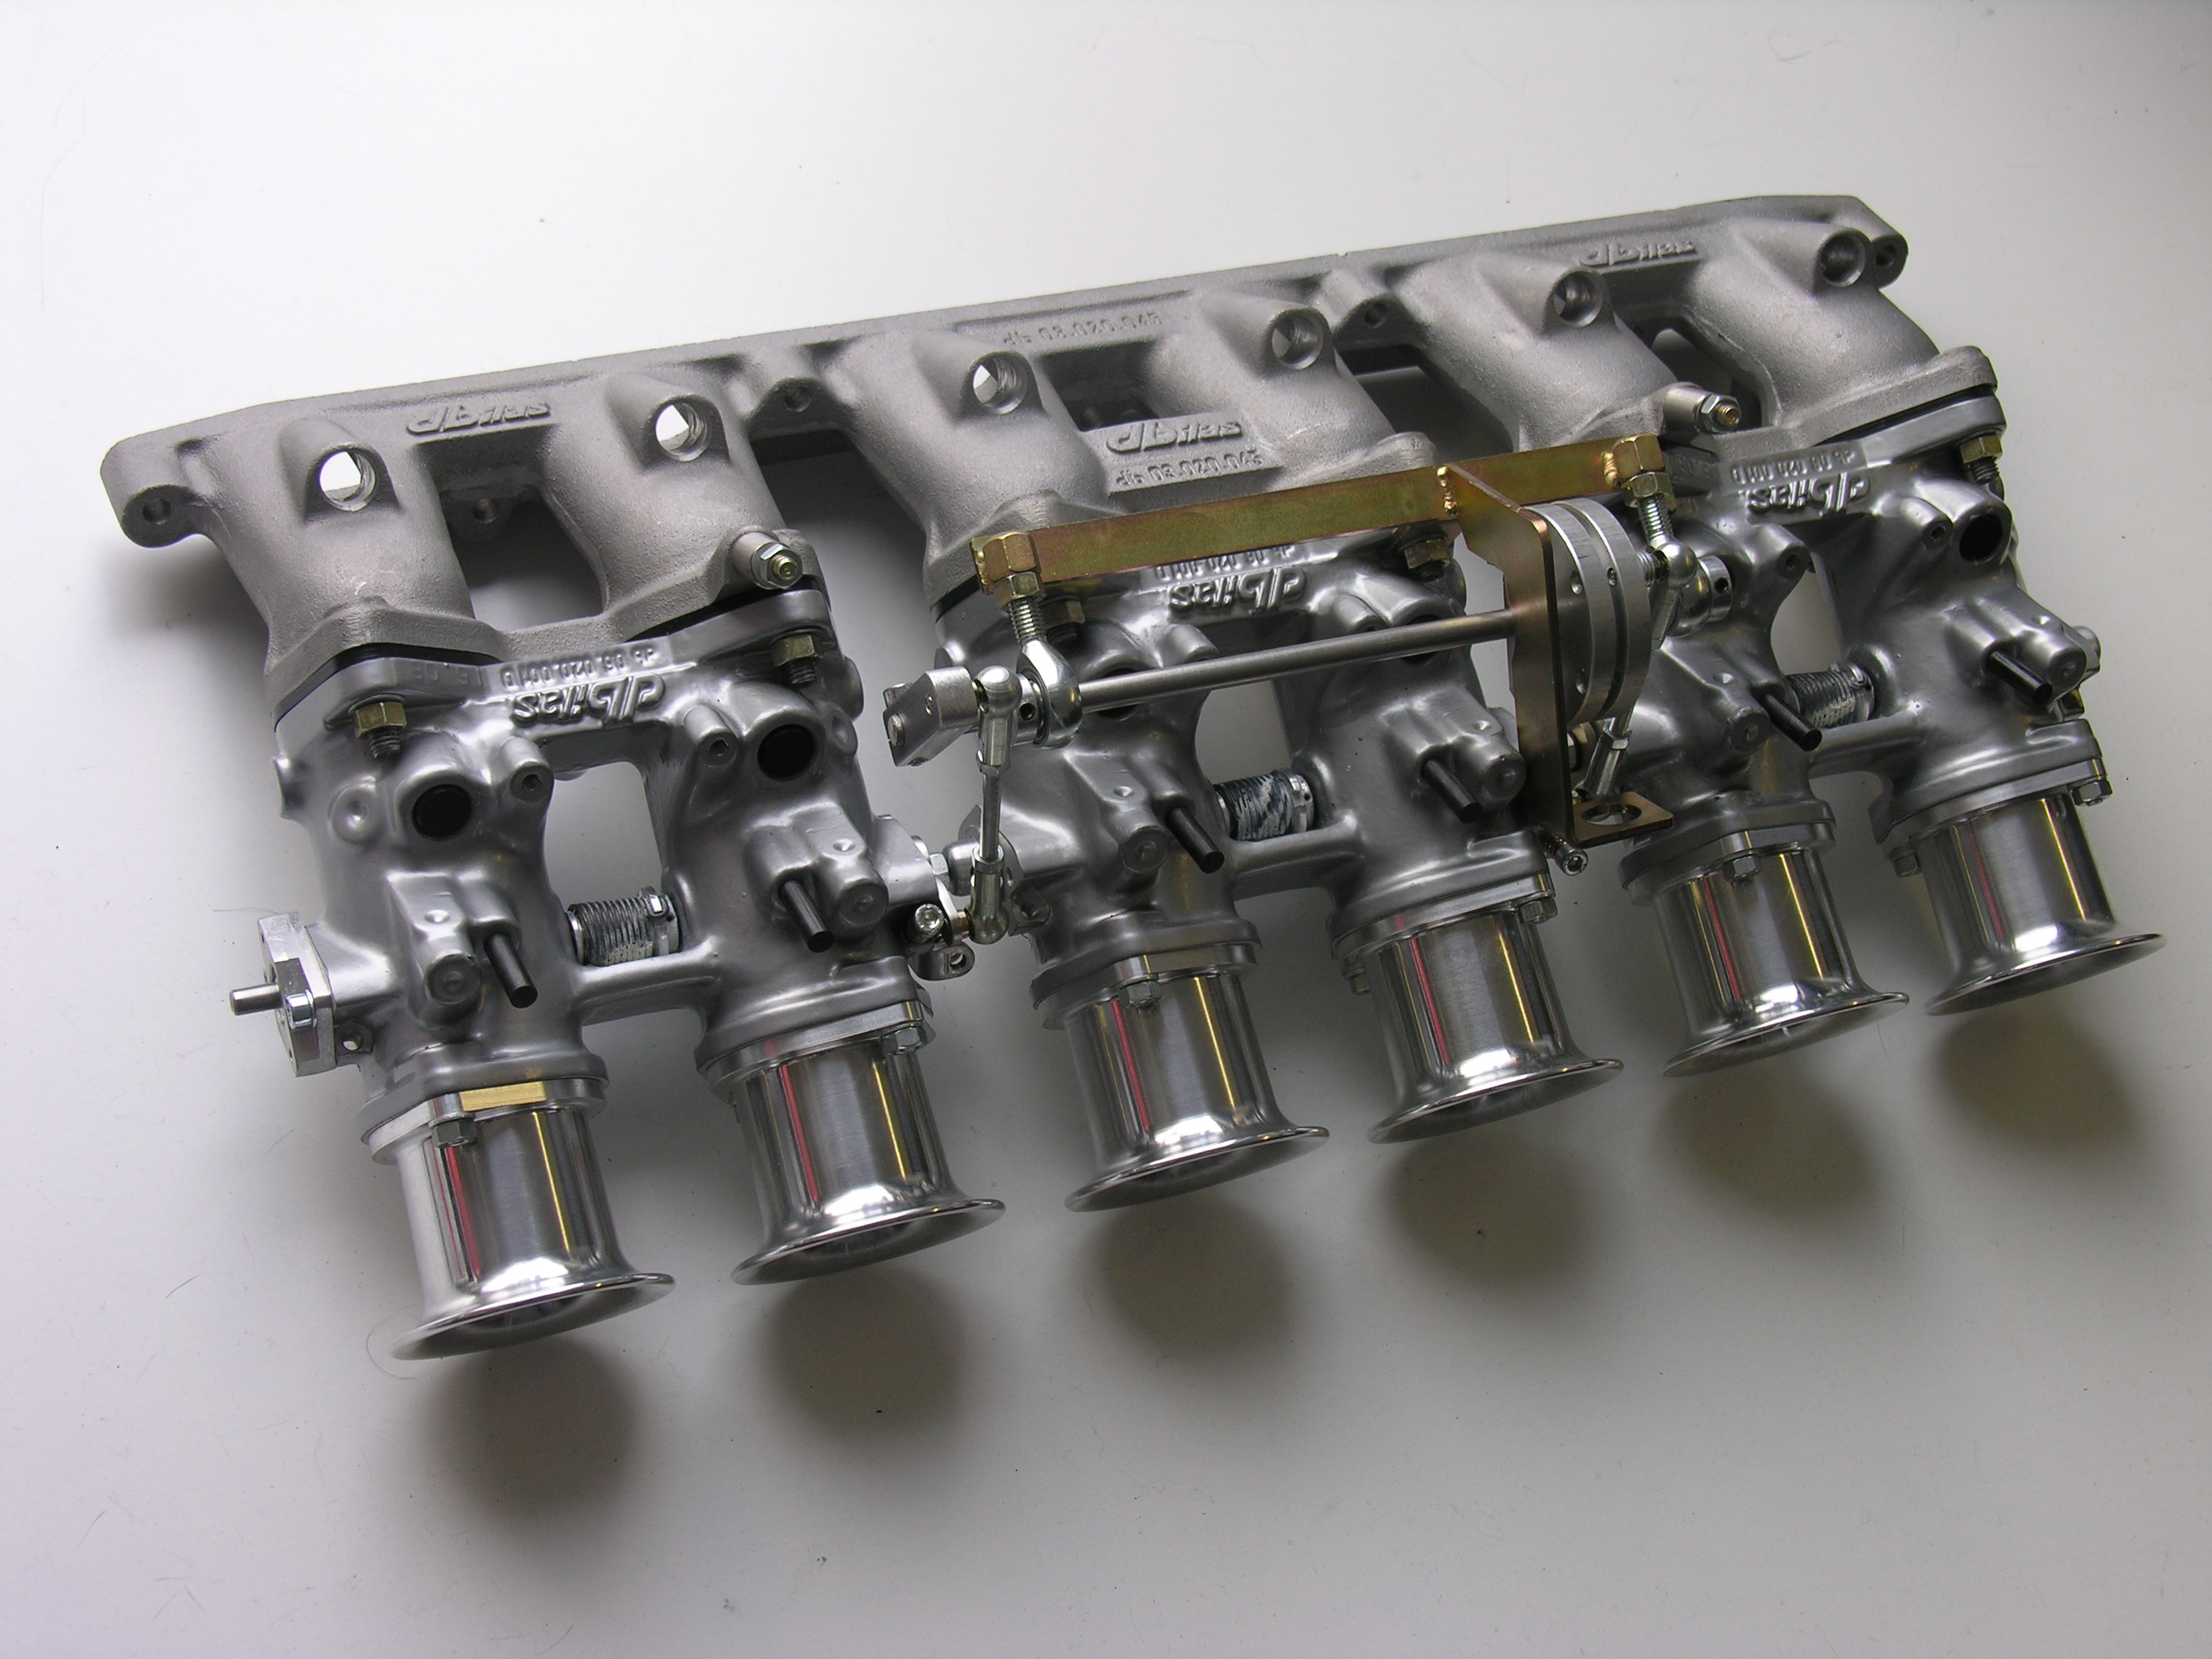 Mutli-throttle intake system for racing  for BMW  2,0l - 2,8l     M50B20, M52B20, M52B25, M52B28